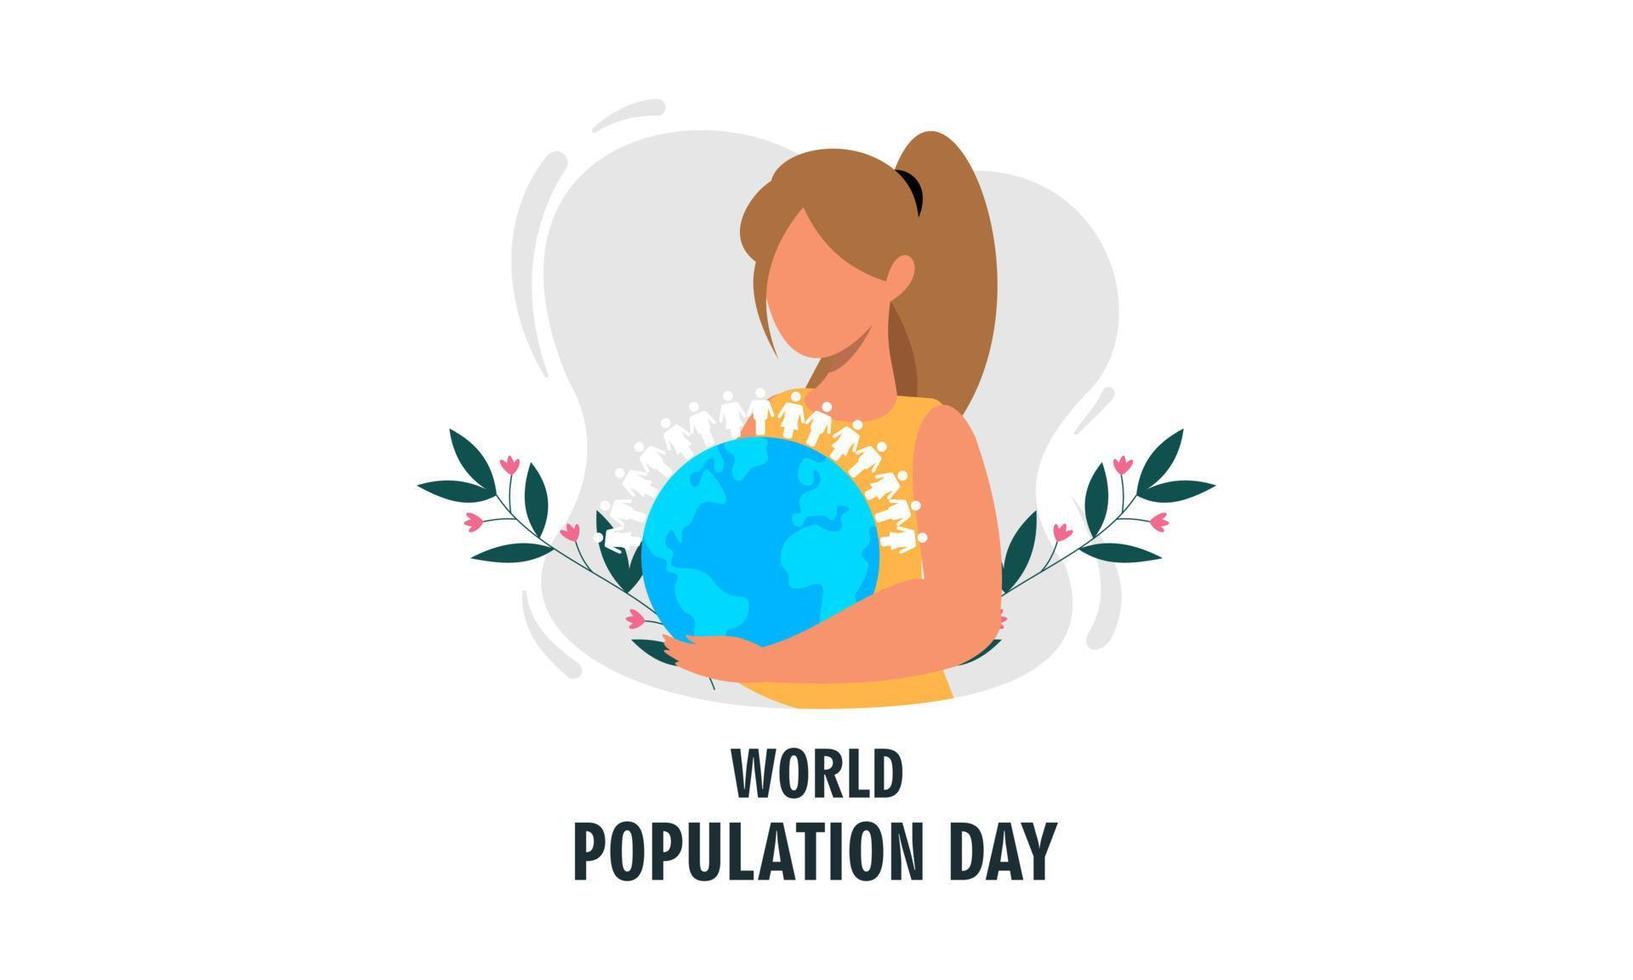 World population day illustration, poster or banner vector